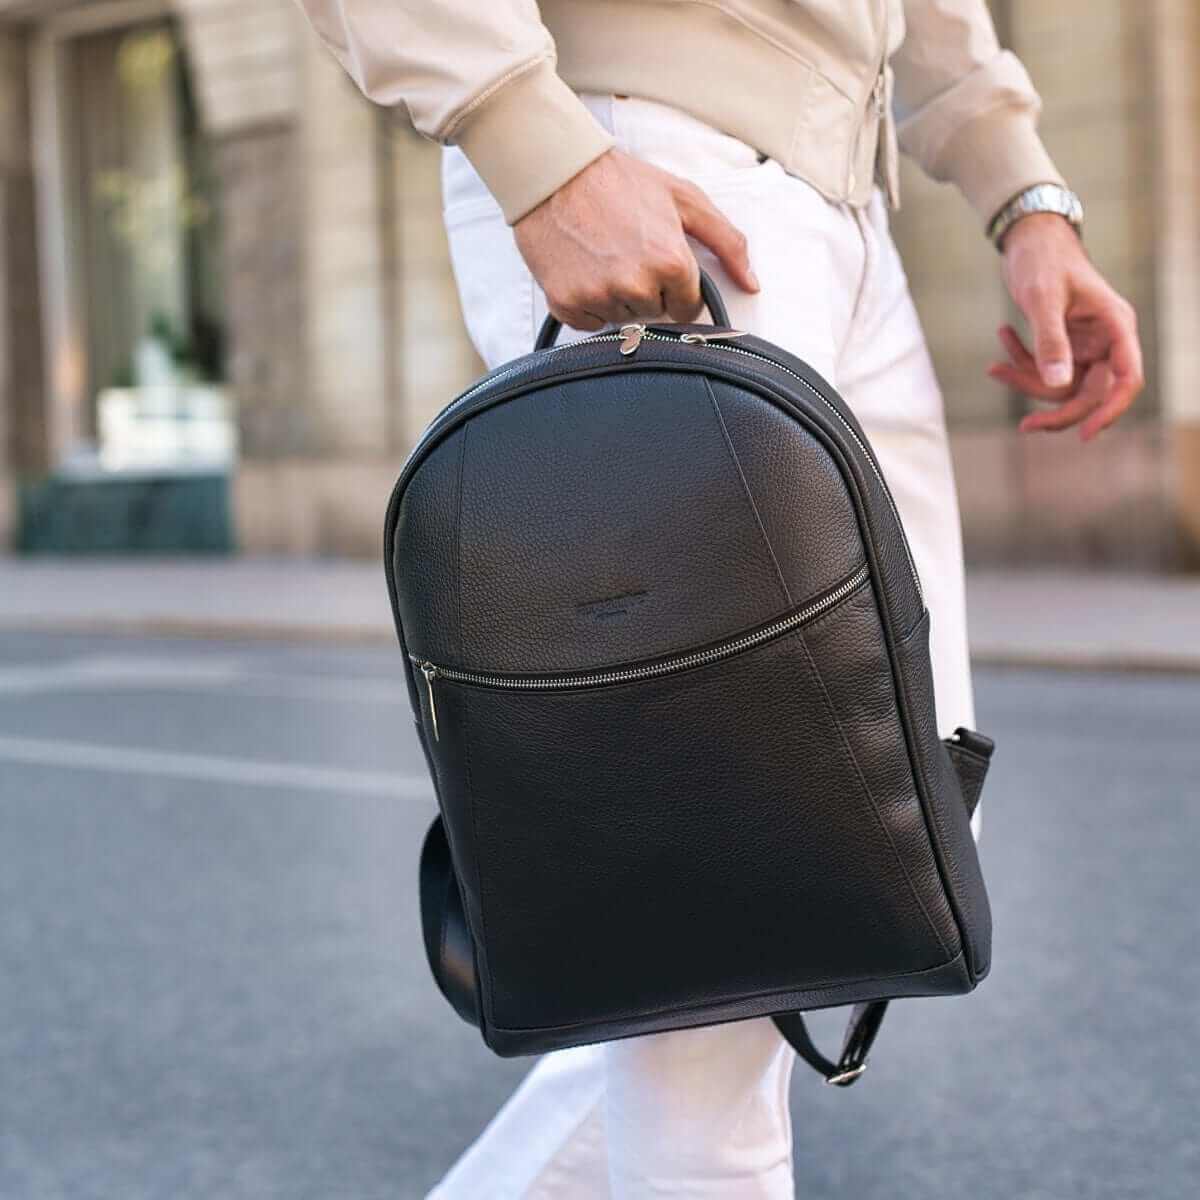 Backpack Mini Black Handcrafted Leather - Arsante® of Sweden